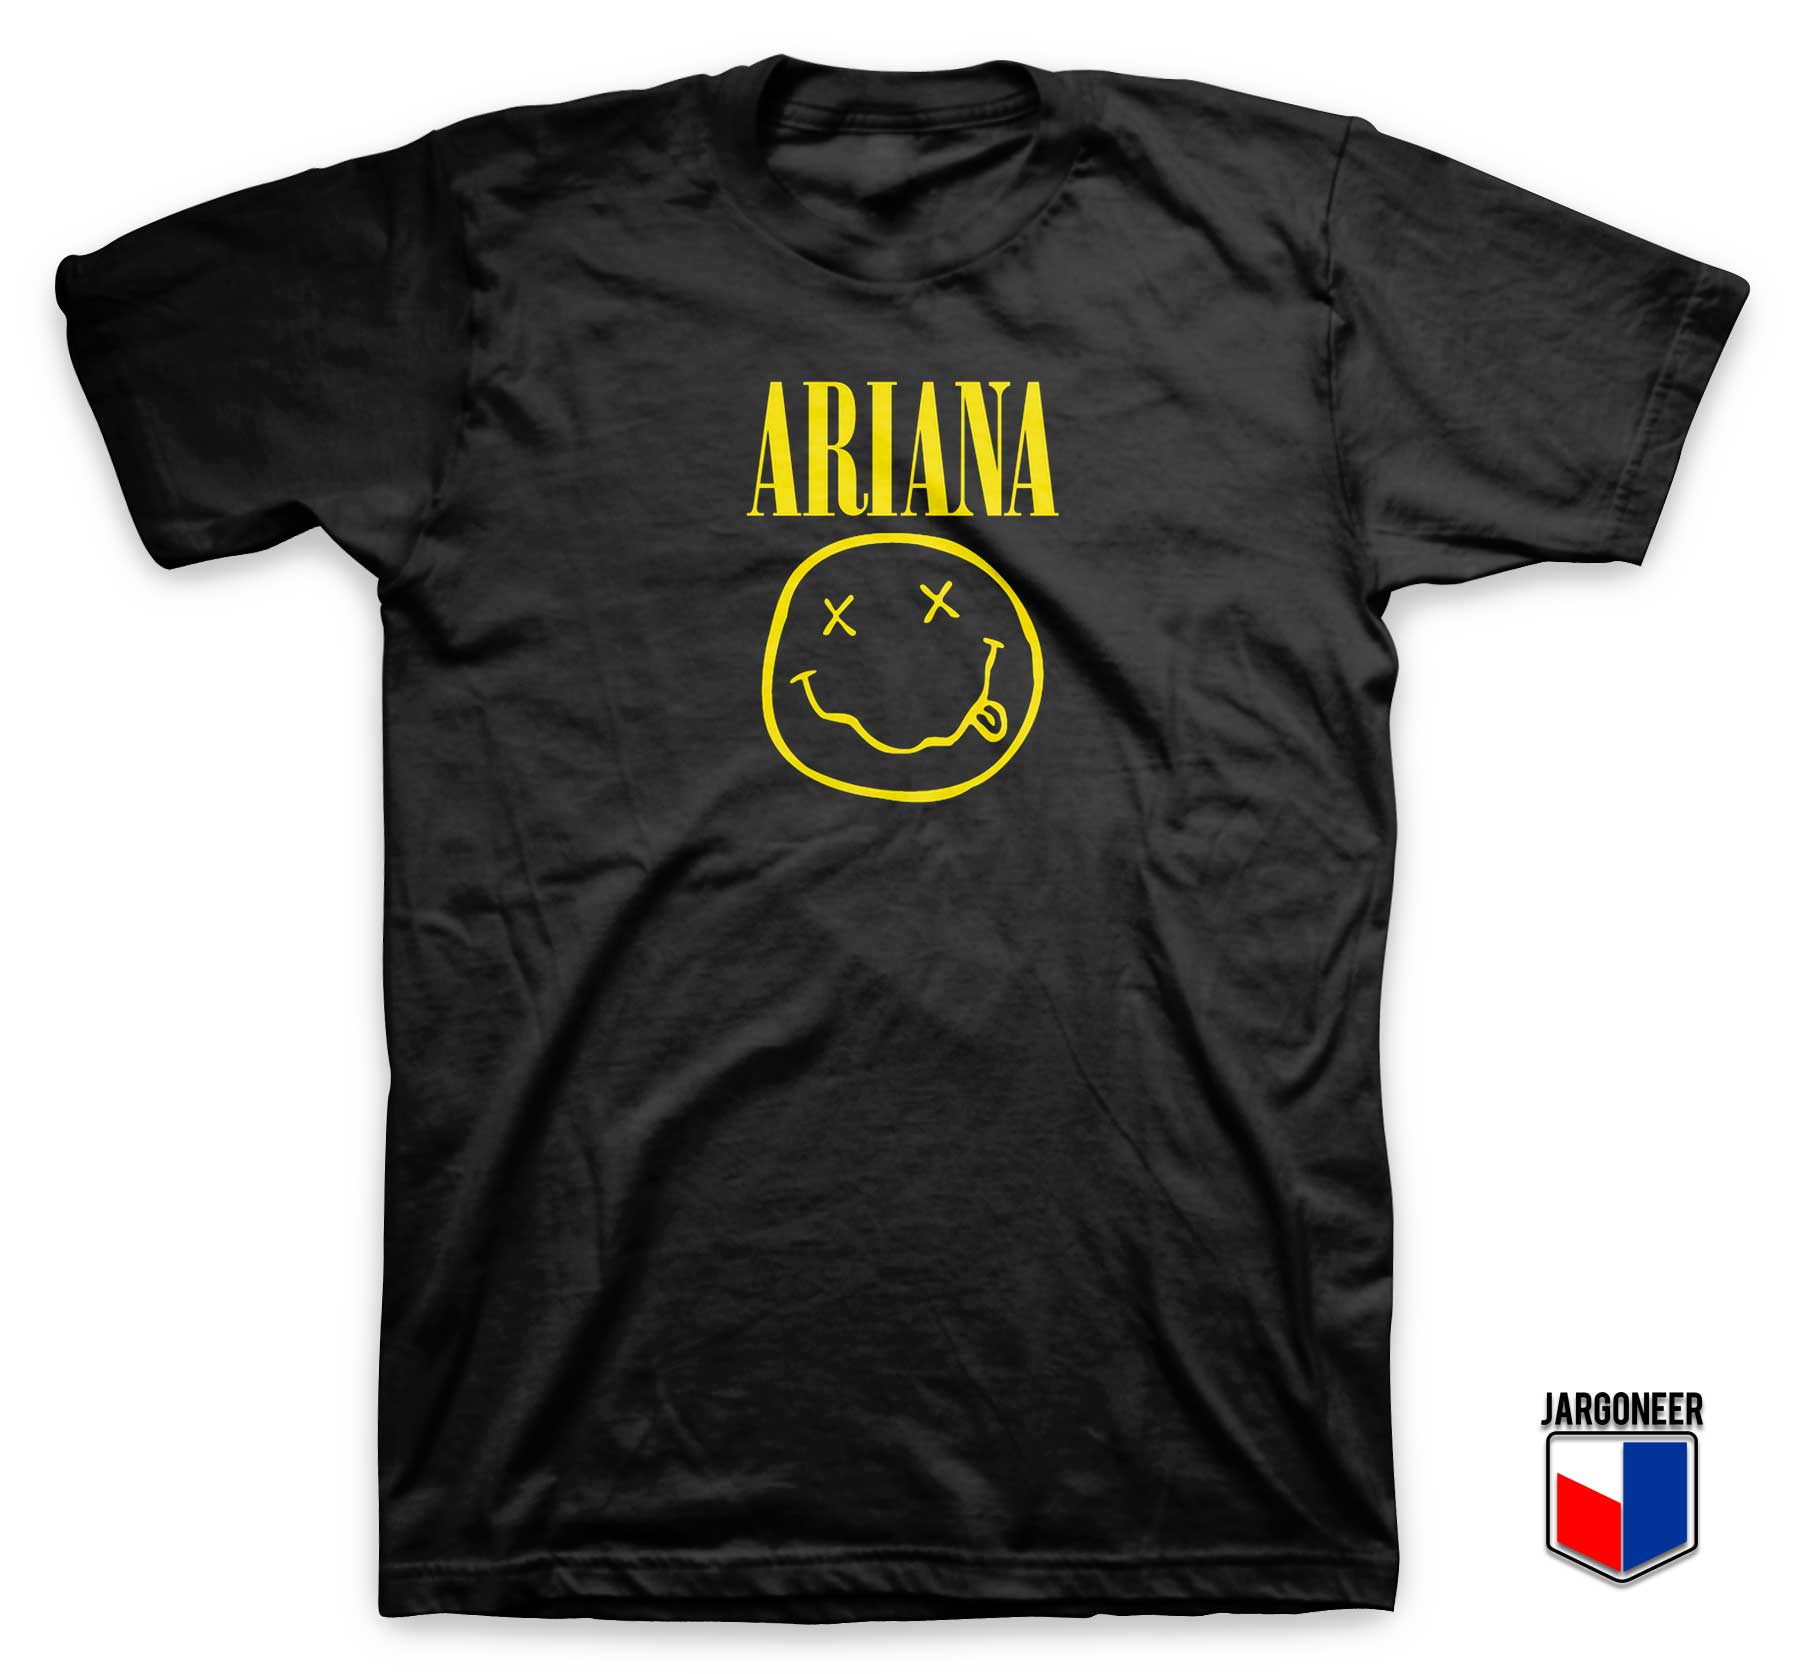 Ariana Rock Style T Shirt - Shop Unique Graphic Cool Shirt Designs